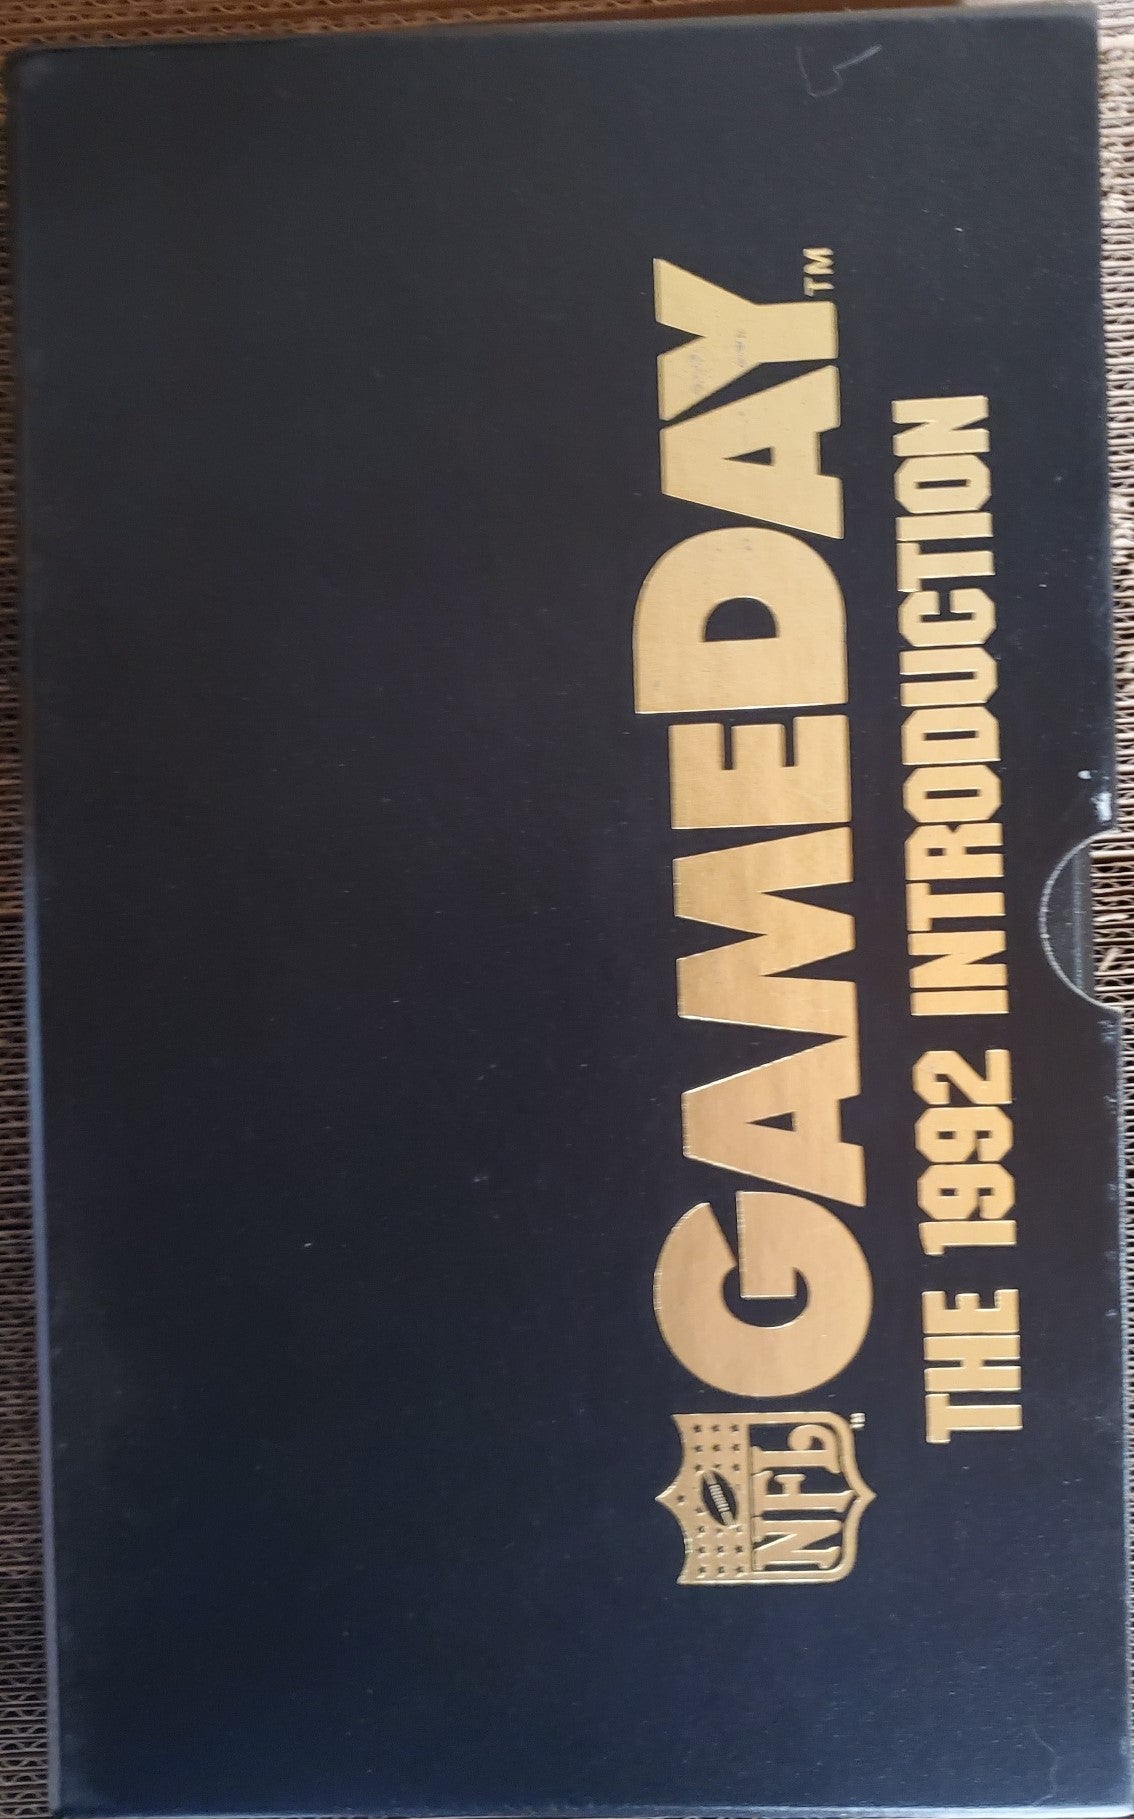 NFL GameDay Football 1992 PROMO Card SLIPCASE/BINDER SET